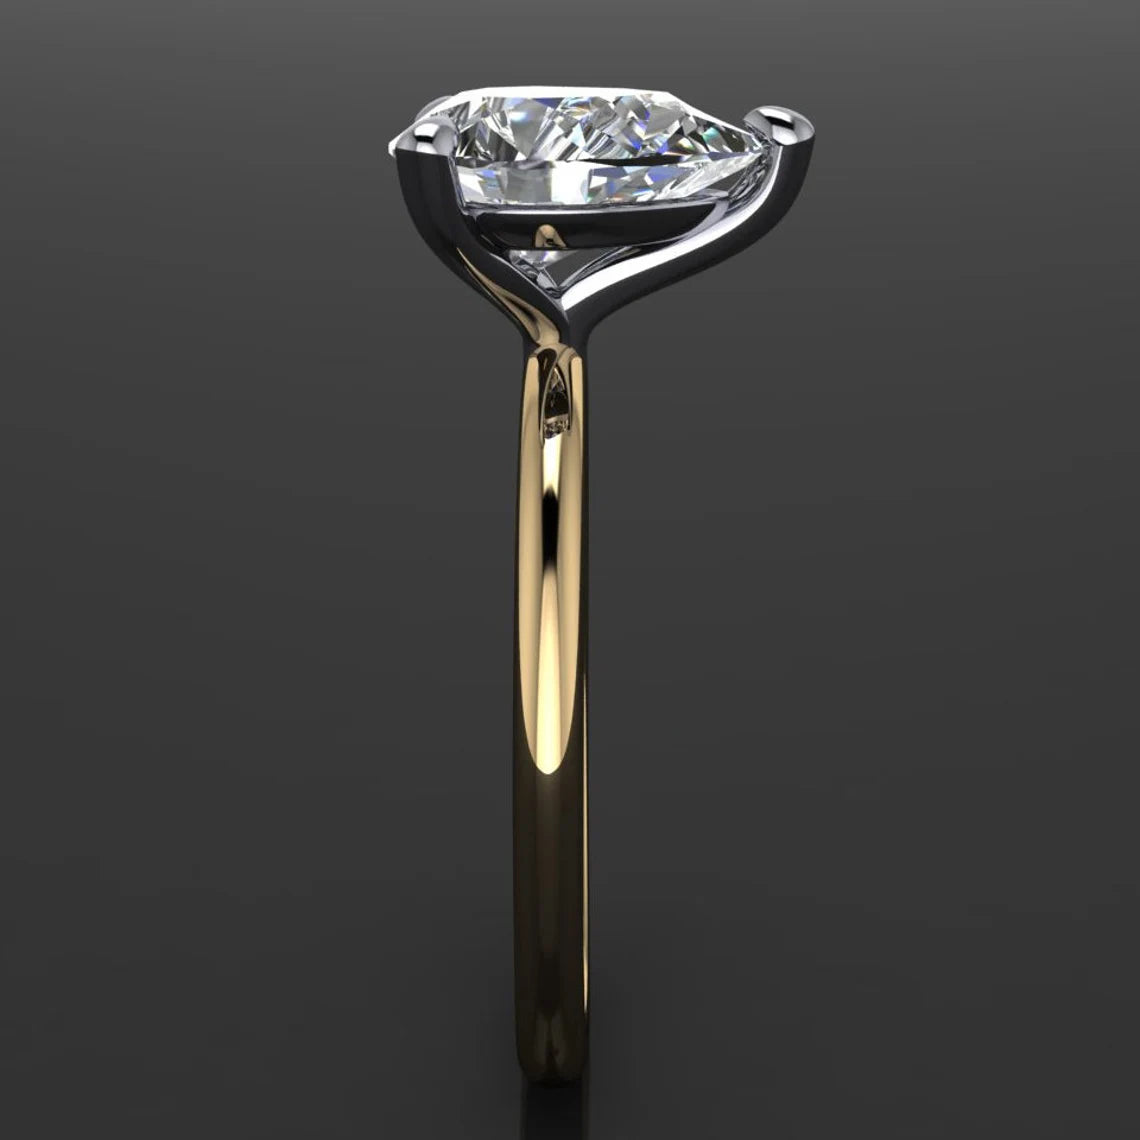 naked shay ring – 2 carat pear moissanite engagement ring, ZAYA Moissanite - J Hollywood Designs